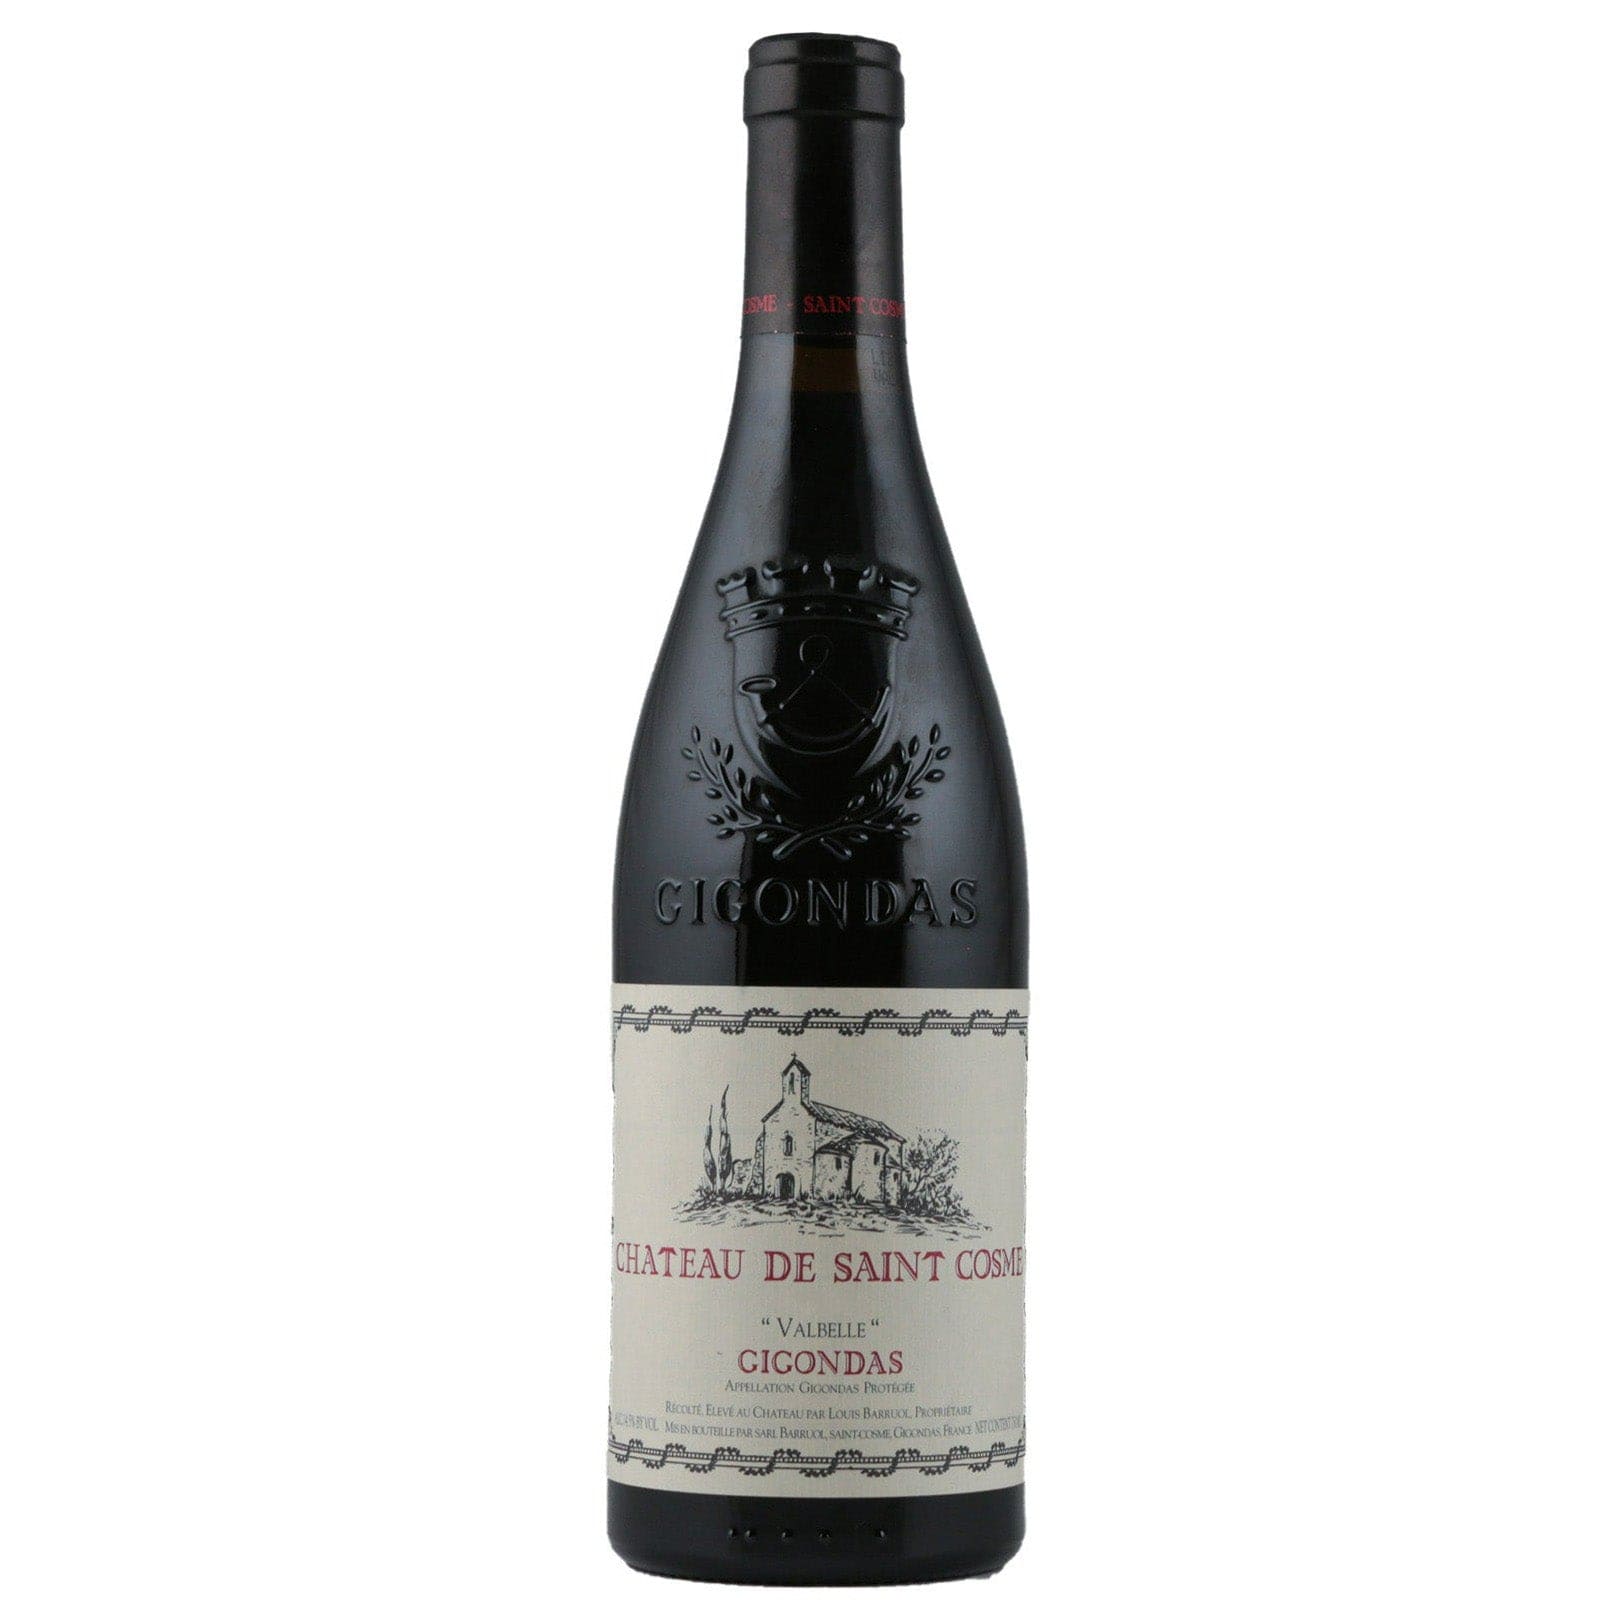 Single bottle of Red wine Chateau de Saint Cosme, Valbelle, Gigondas, 2009 90% Grenache, 10% Syrah